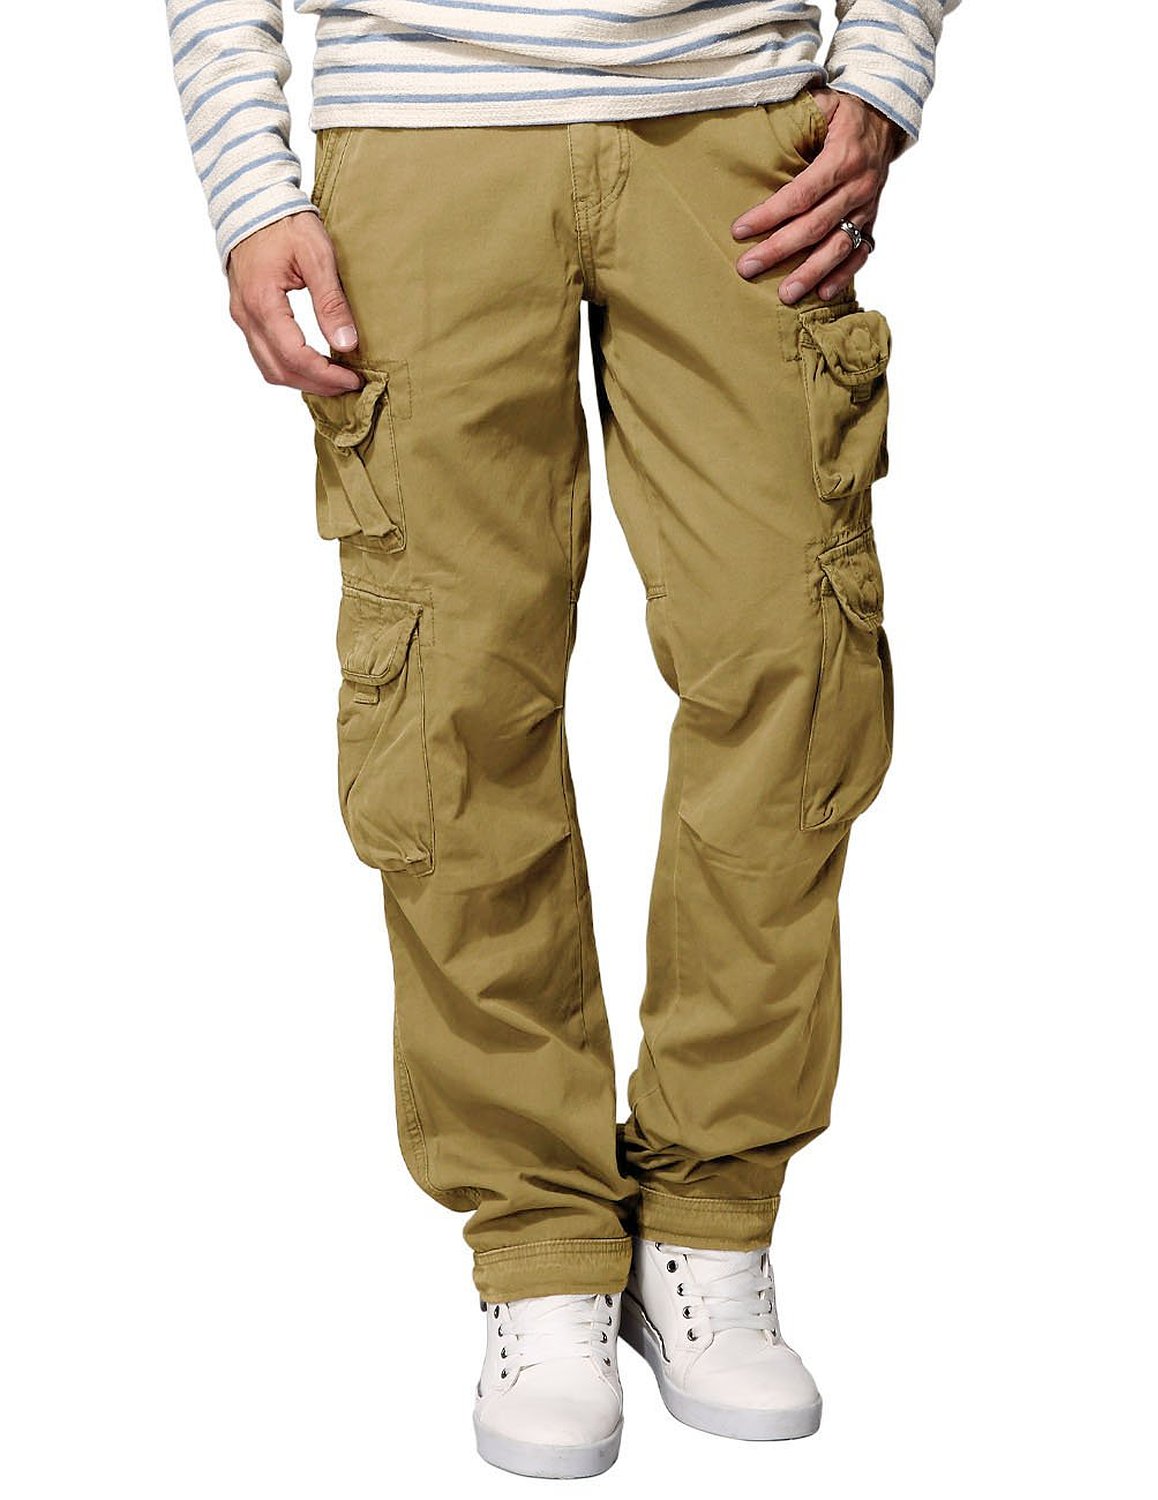 Match ranger cargo pants - Mens Urban Clothing